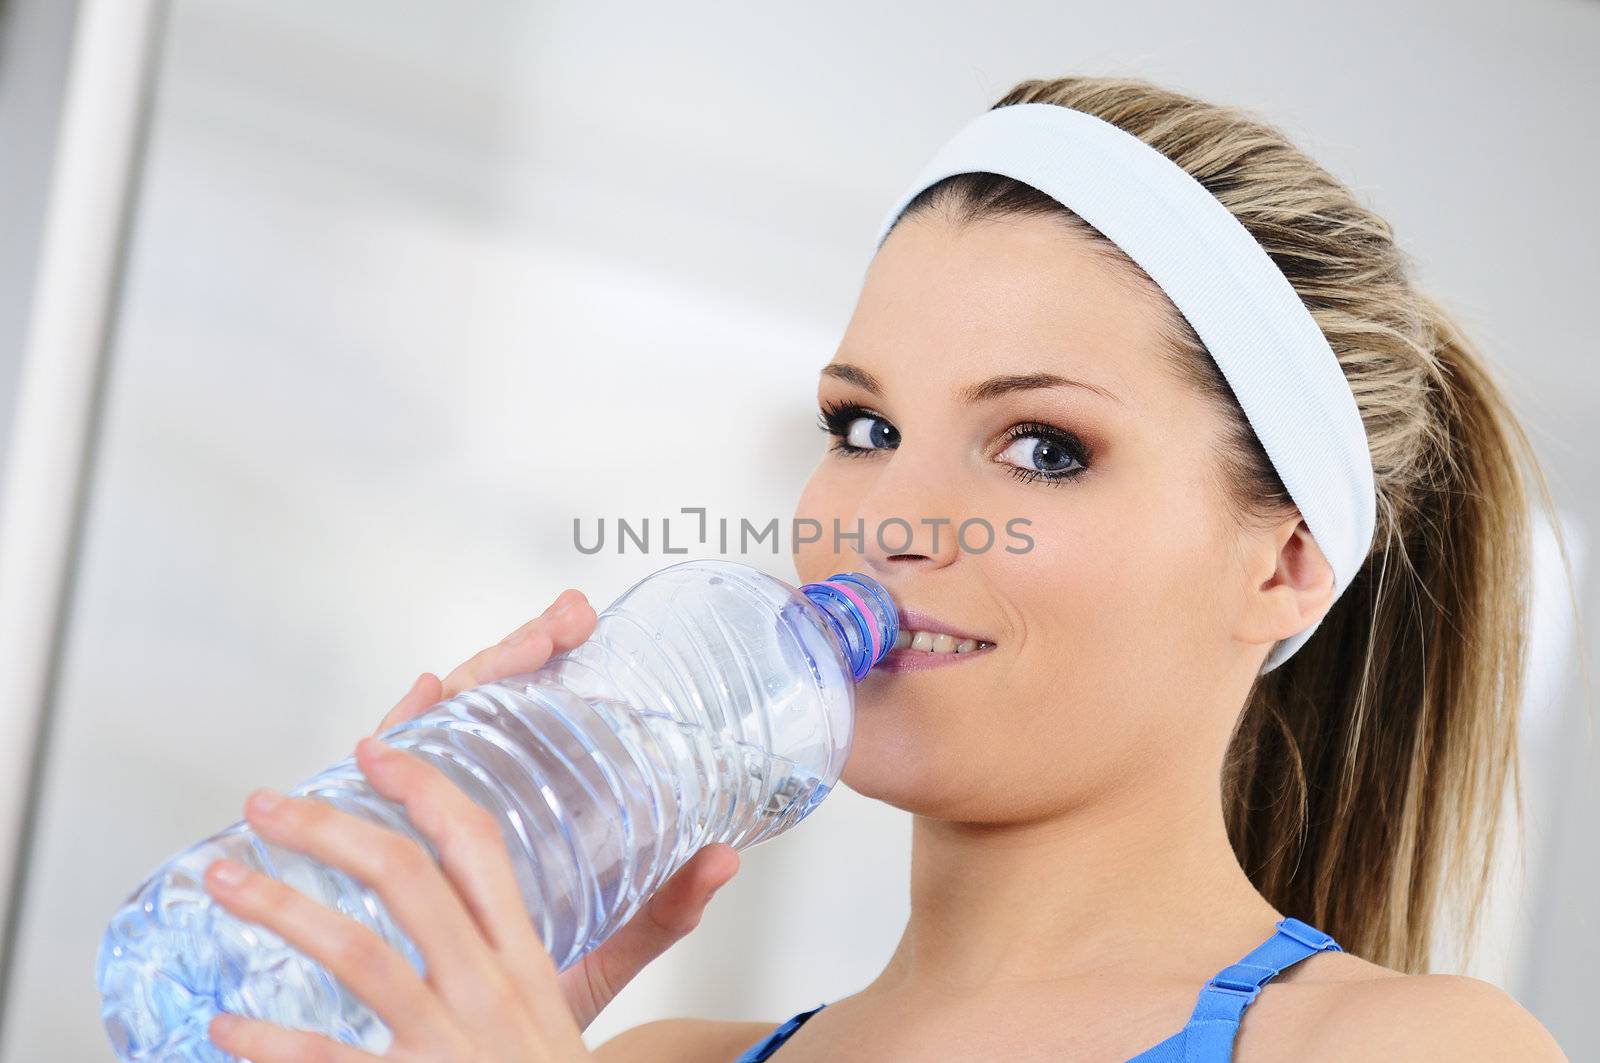 bottle of water by ventdusud